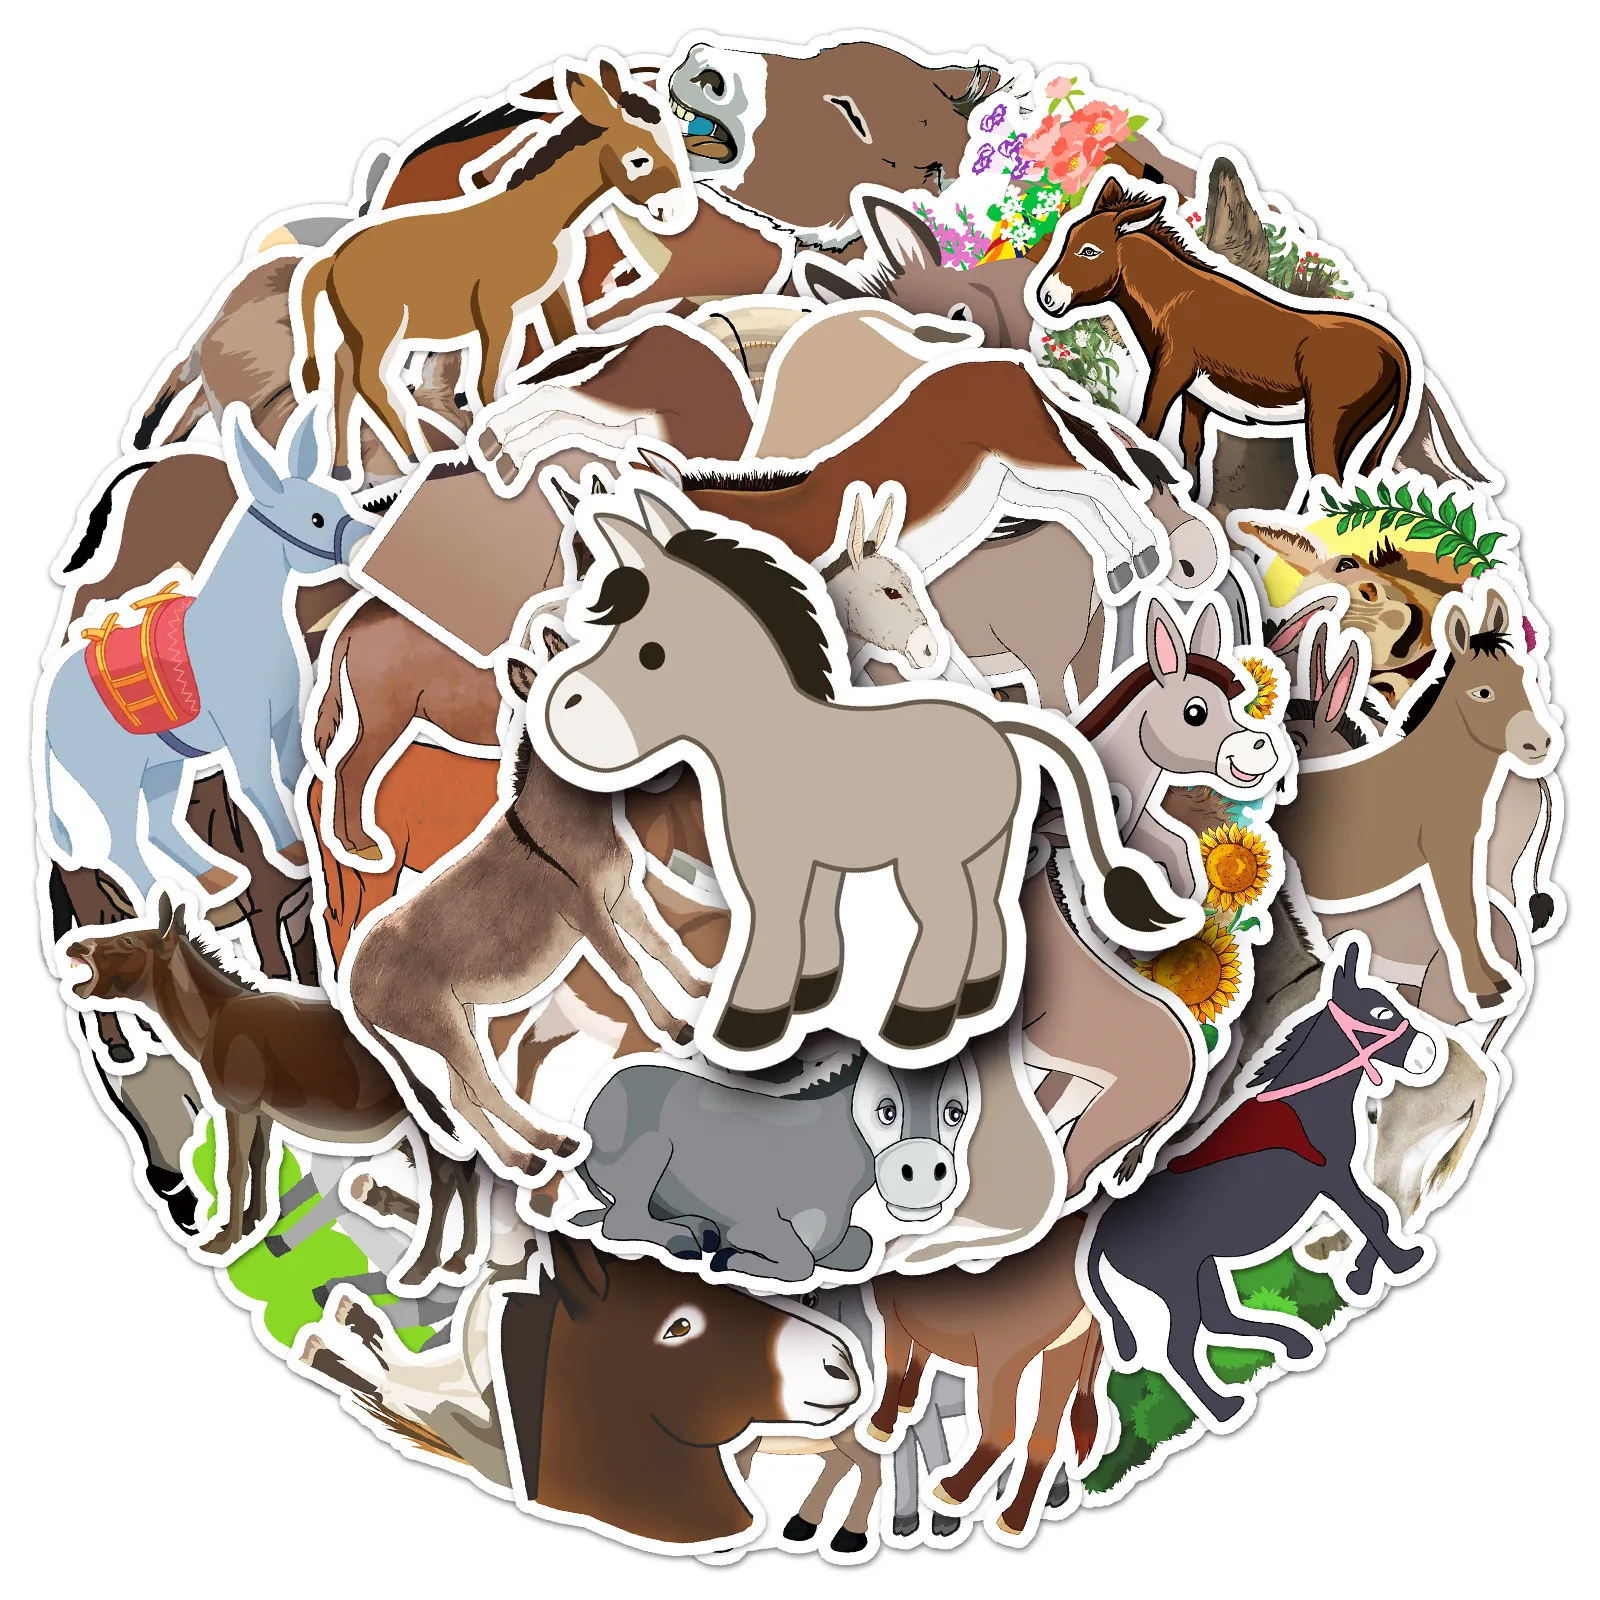 50 Waterproof Cartoon Donkey Animal Stickers For Water Bottles, Laptops,  Cars, Scrapbooking, Phones, Mac, Wardrobes, Door Walls, And Tablets From  Homezy, $1.9